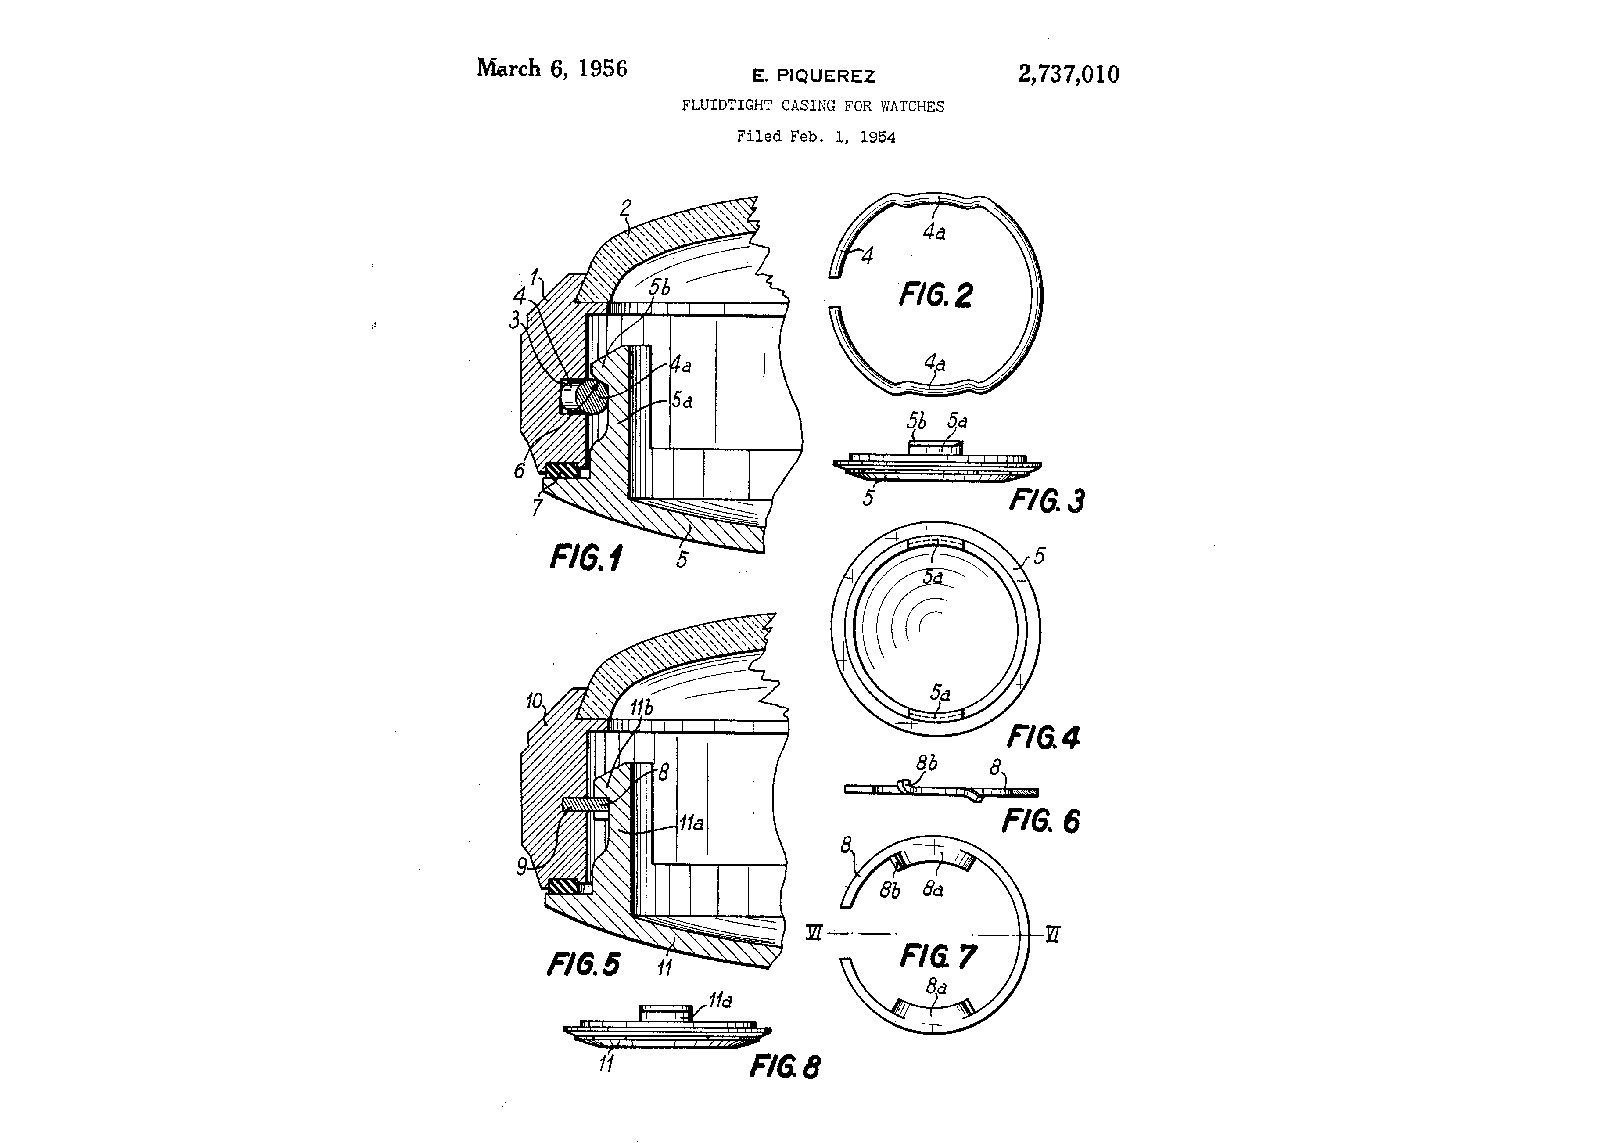 Sơ đồ bằng sáng chế của Ervin Piquerez cho vỏ đồng hồ lặn Super-Compressor